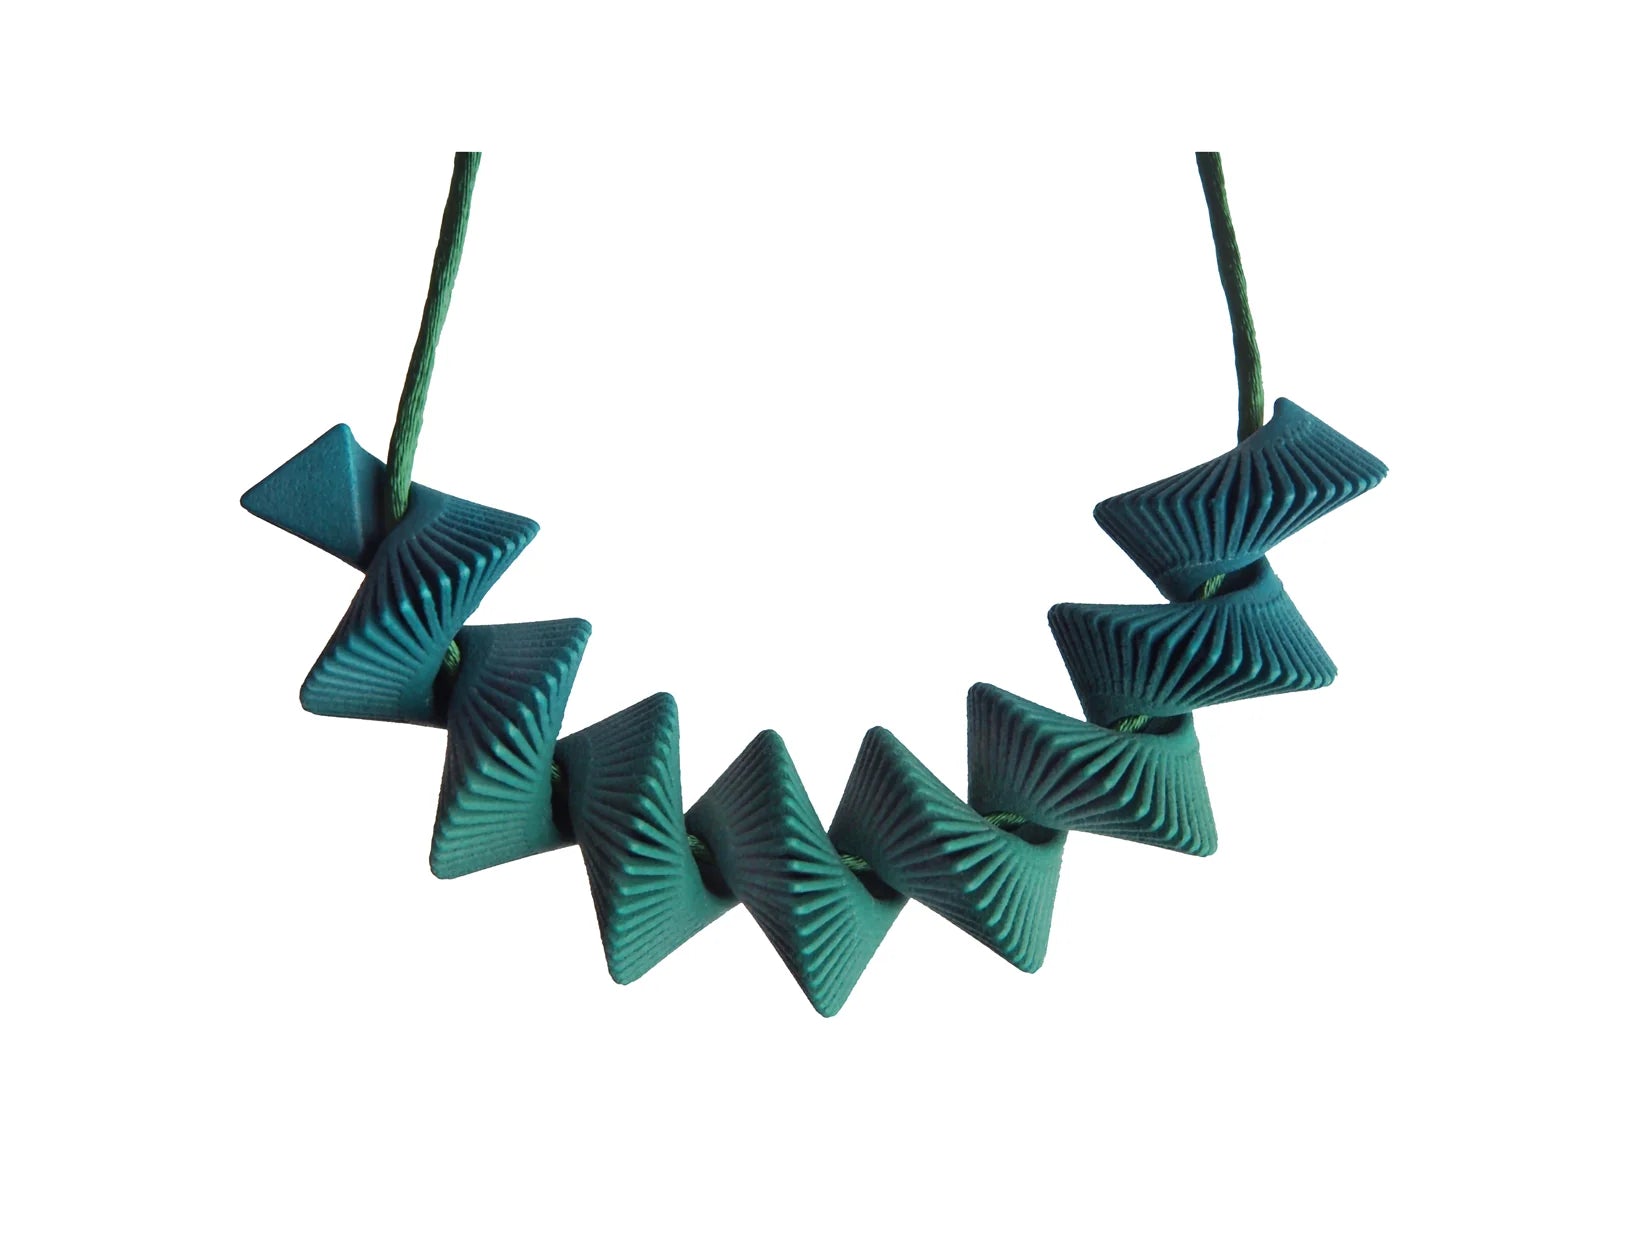 Green Helix Necklace - The Nancy Smillie Shop - Art, Jewellery & Designer Gifts Glasgow